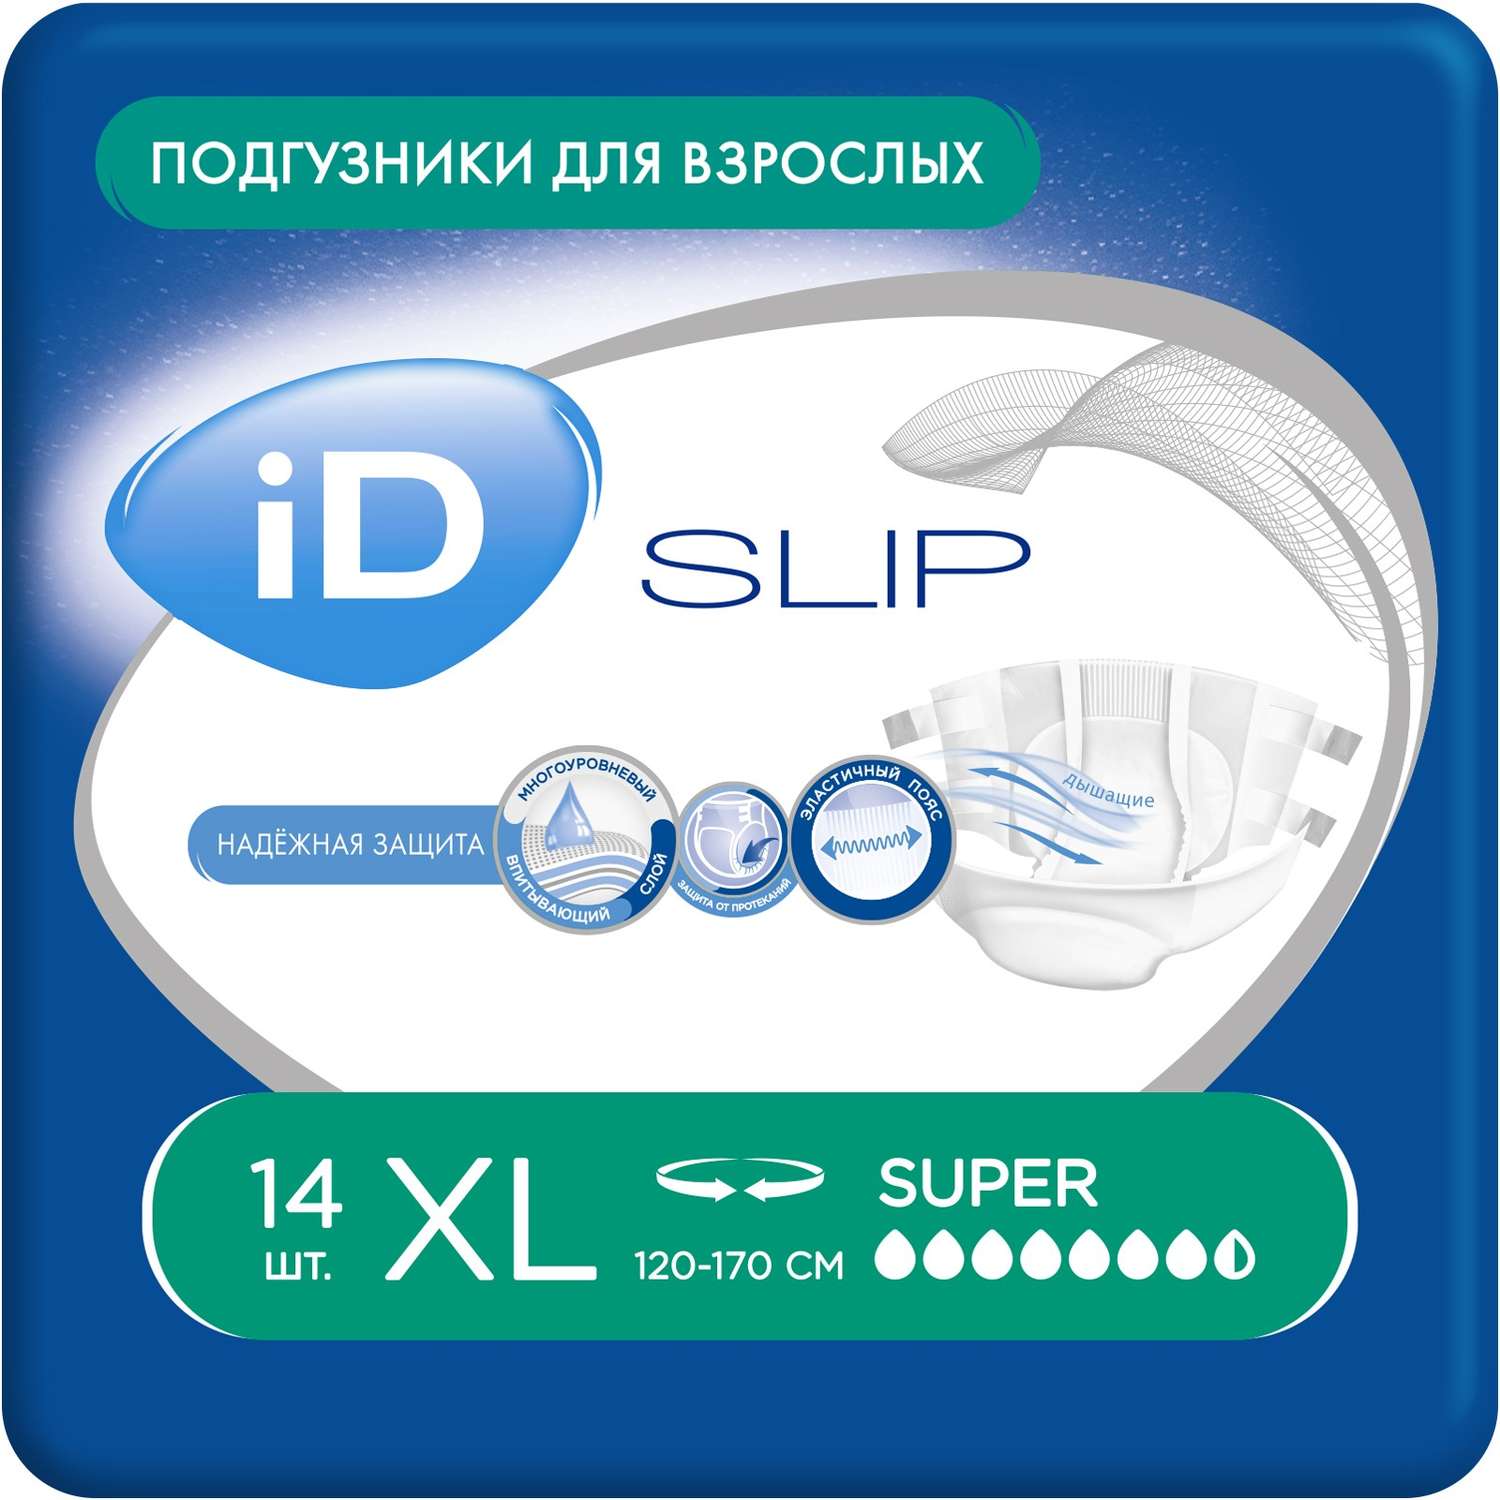 Подгузники для взрослых iD SLIP XL 14 шт. - фото 1